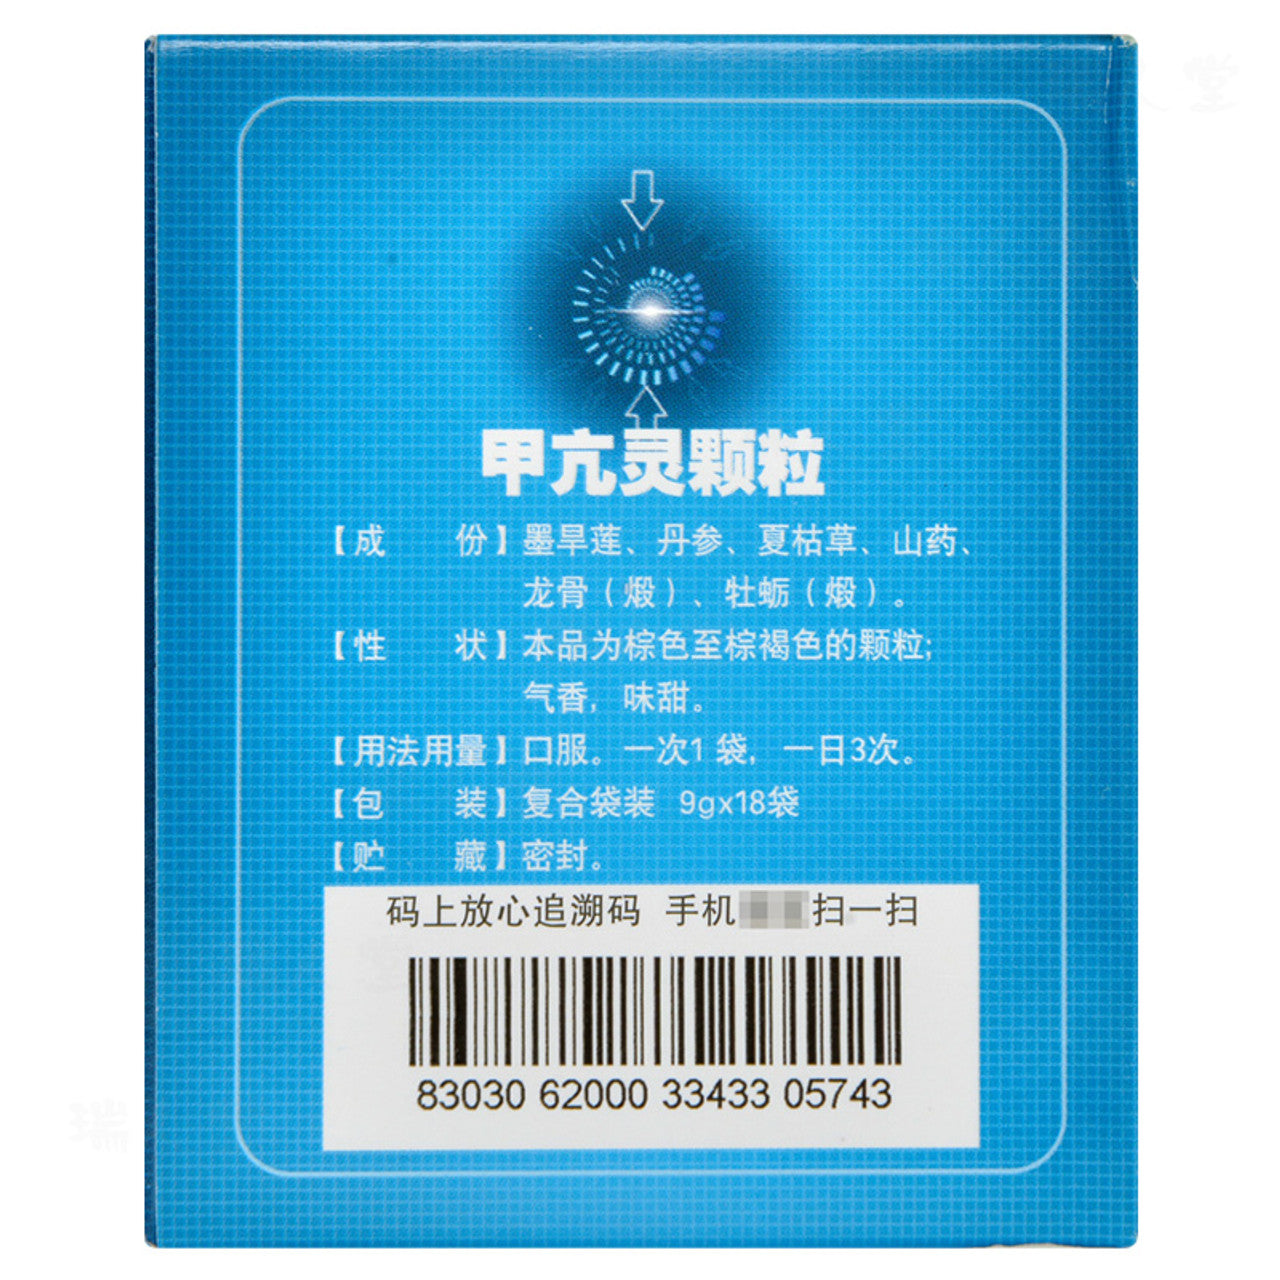 Herbal Medicine. Brand Ren Yuan Tang. Jia Kang Ling Ke Li / Jiakangling Keli / JiakanglingKeli / Jia Kang Ling Granules / Jiakangling Granules for Thyroid Disease